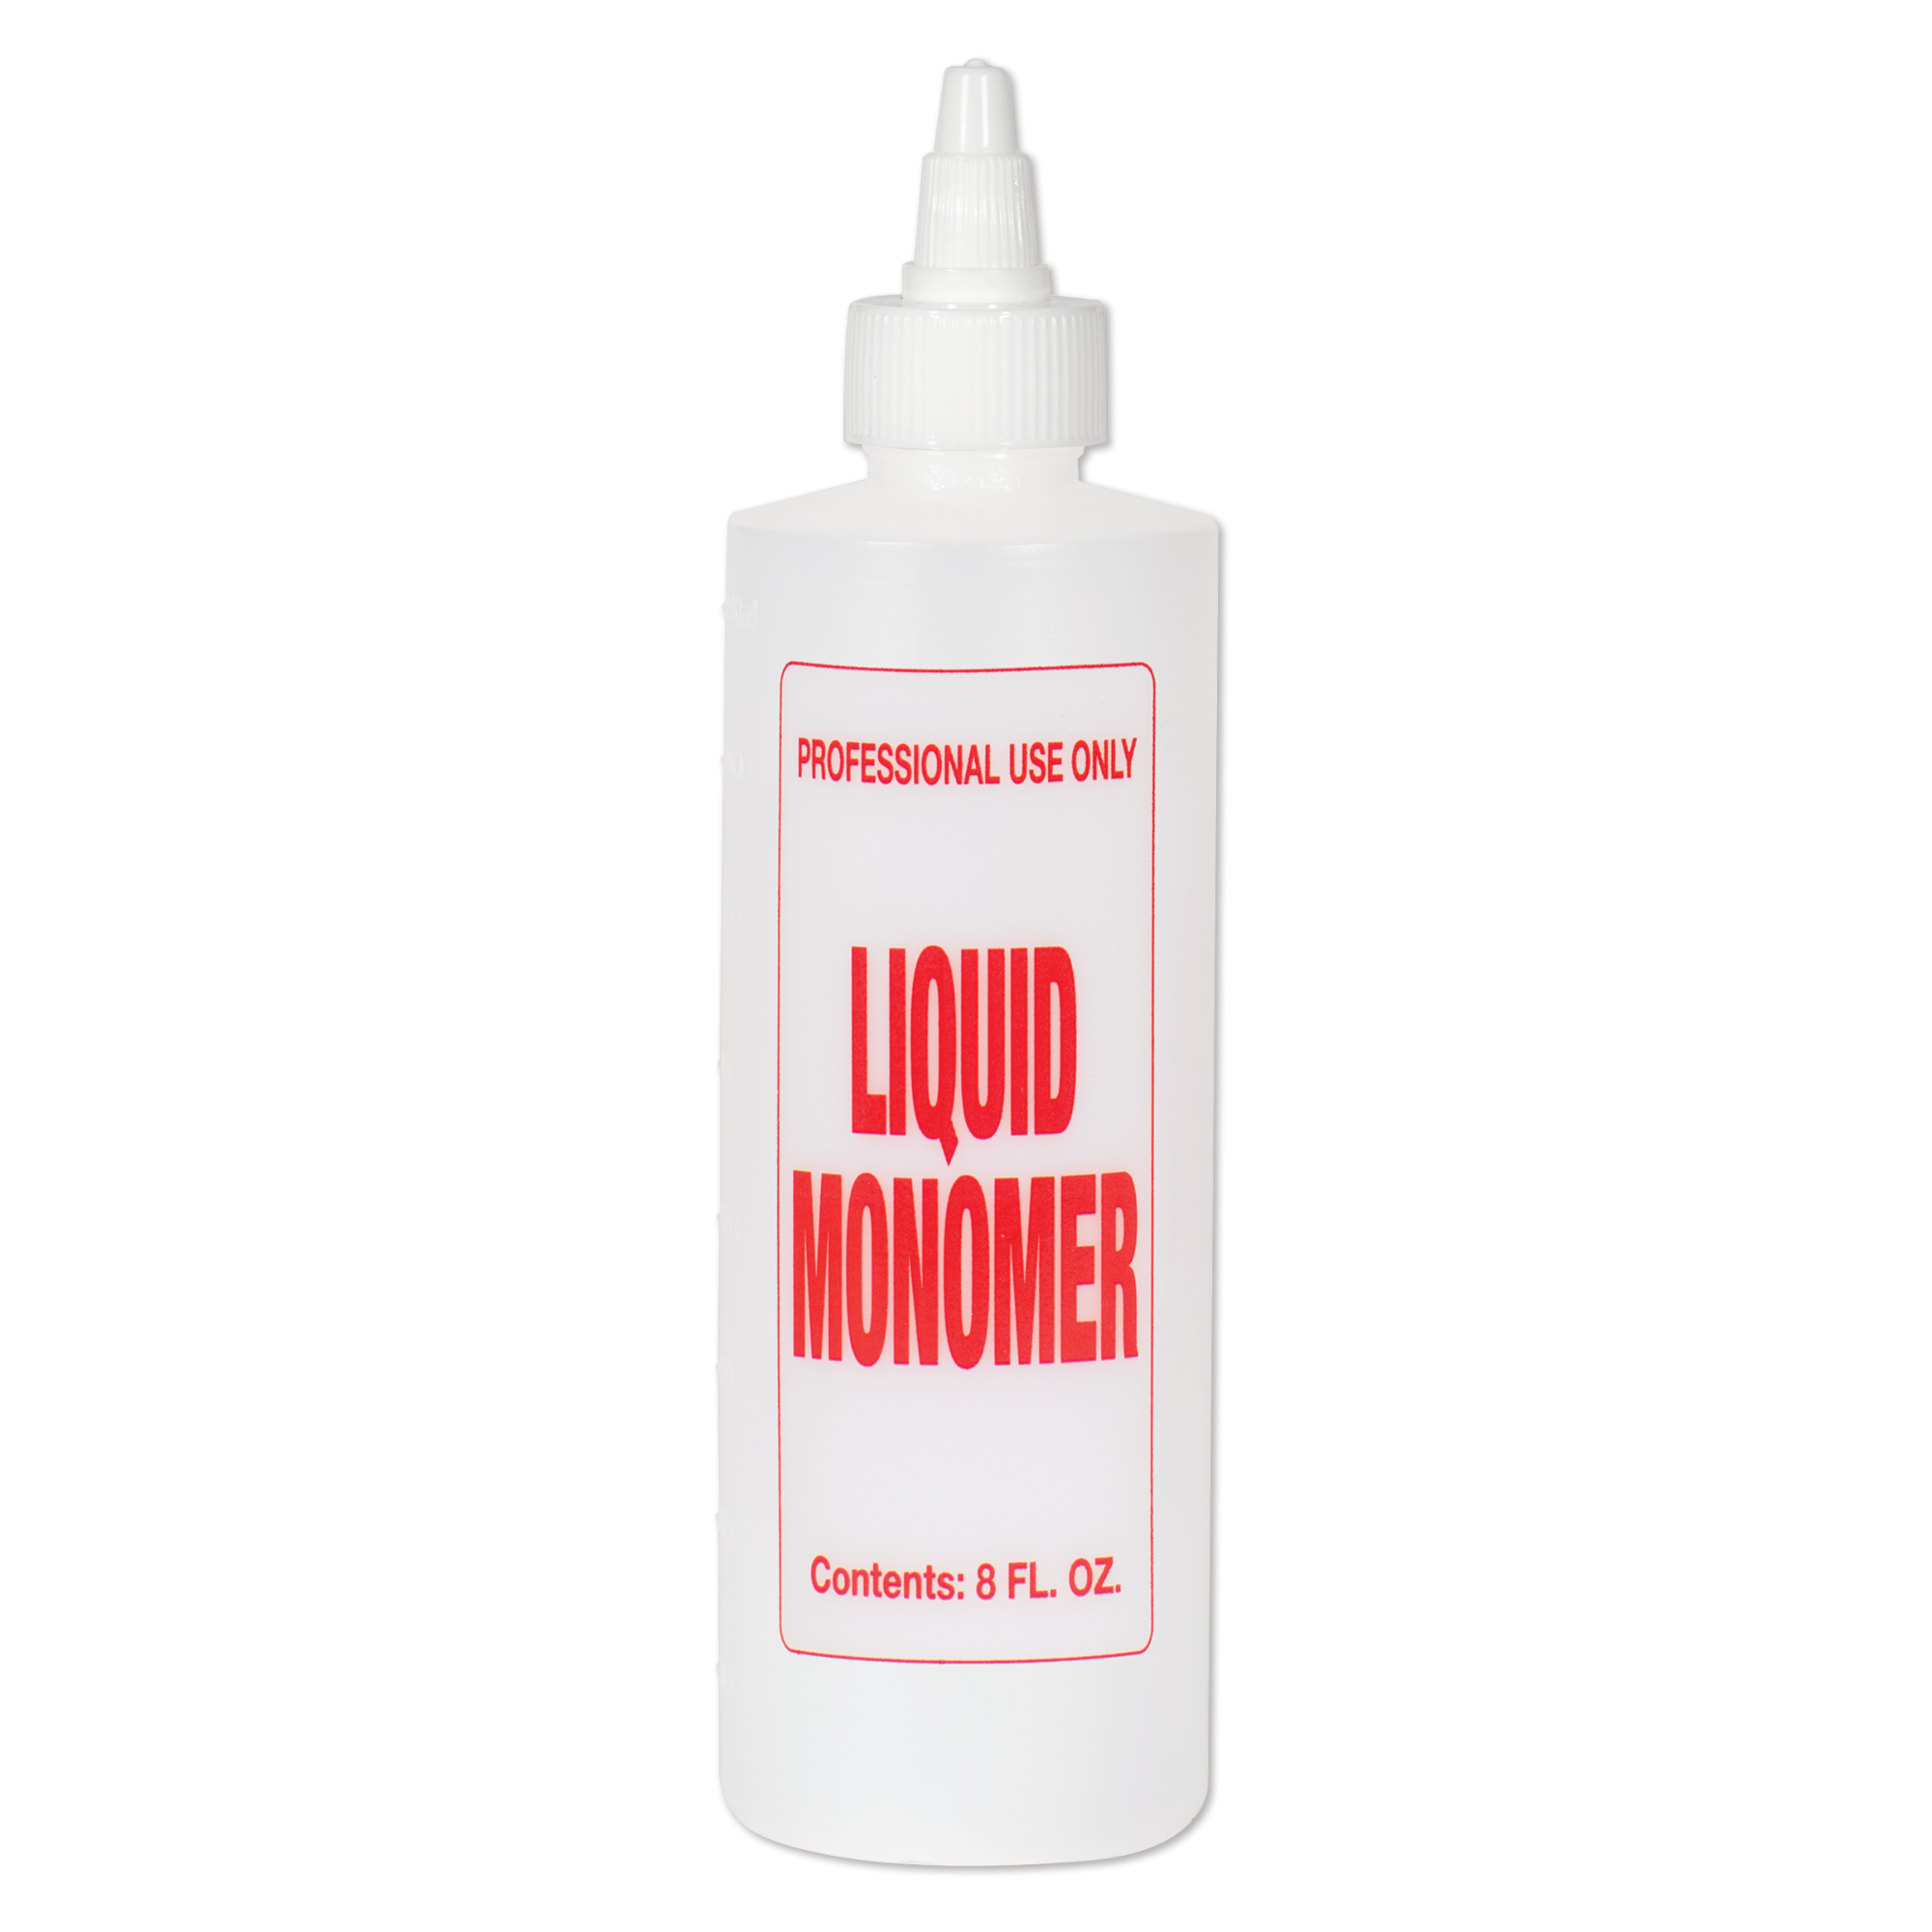 Imprinted Twist Top Bottle, Liquid Monomer, 8 oz.